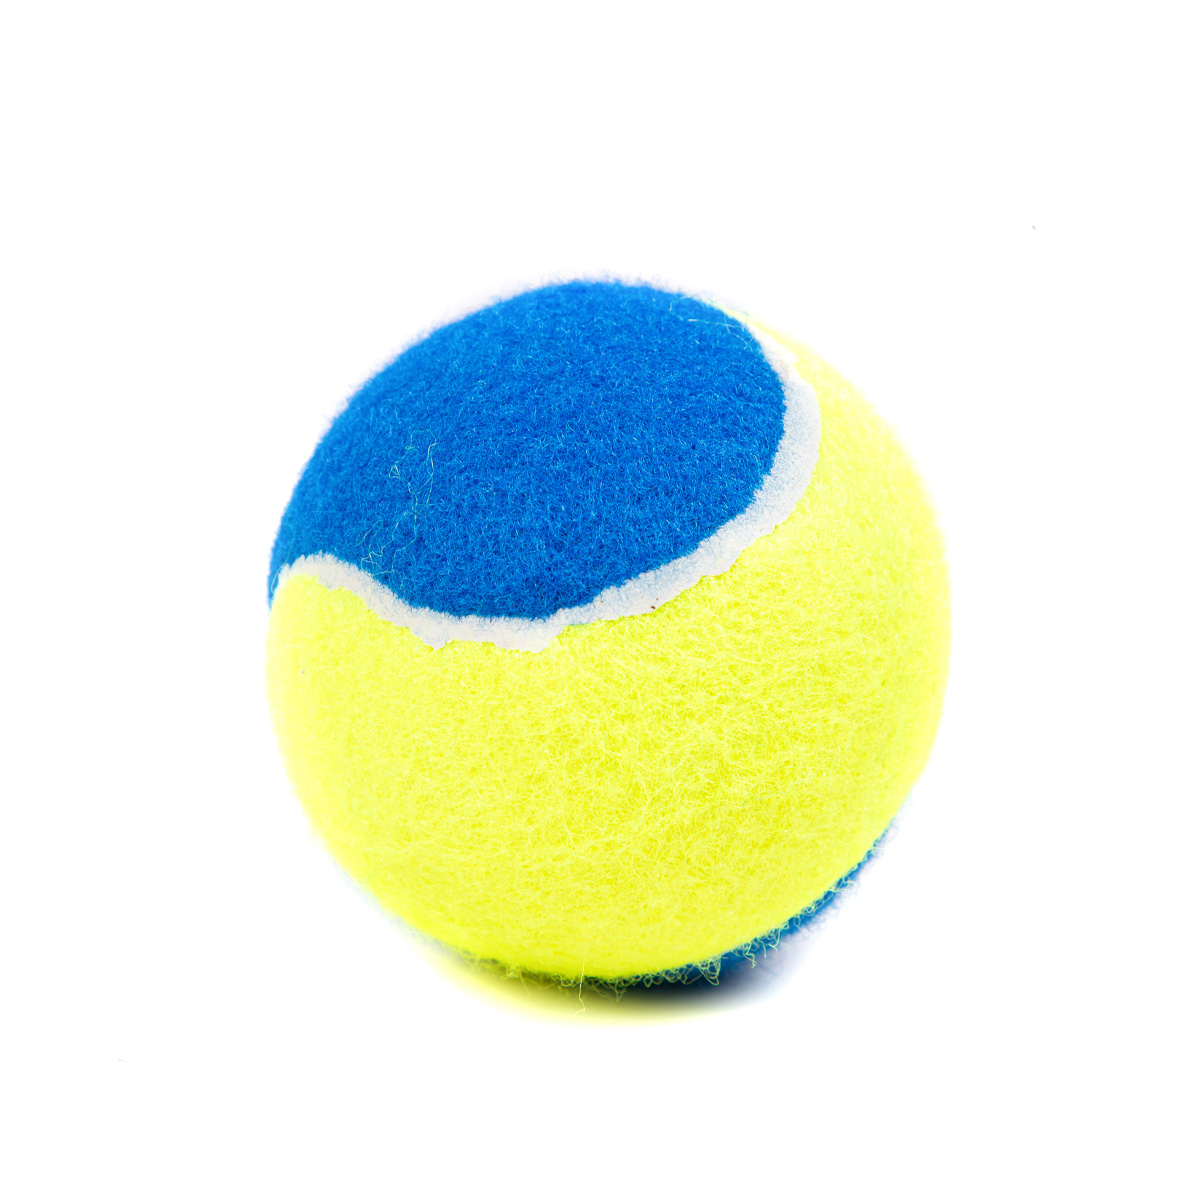 Balle de tennis sonore - ACTINOMIE, la boutique